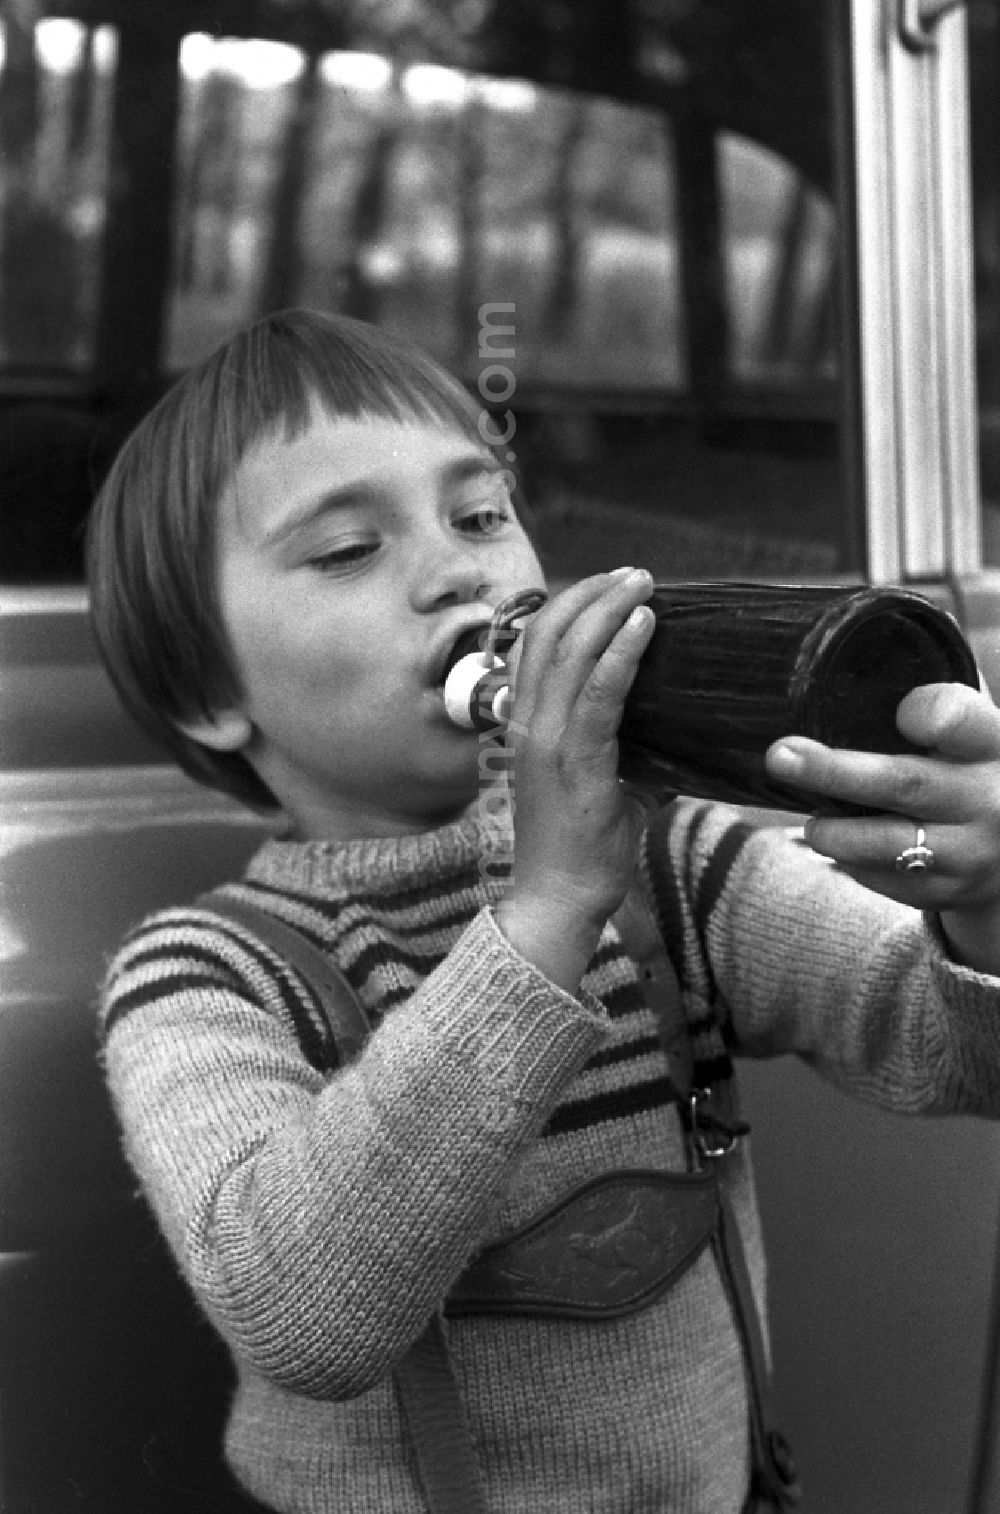 GDR photo archive: Malge - A girl drinking from a glass bottle of lemonade in Malge